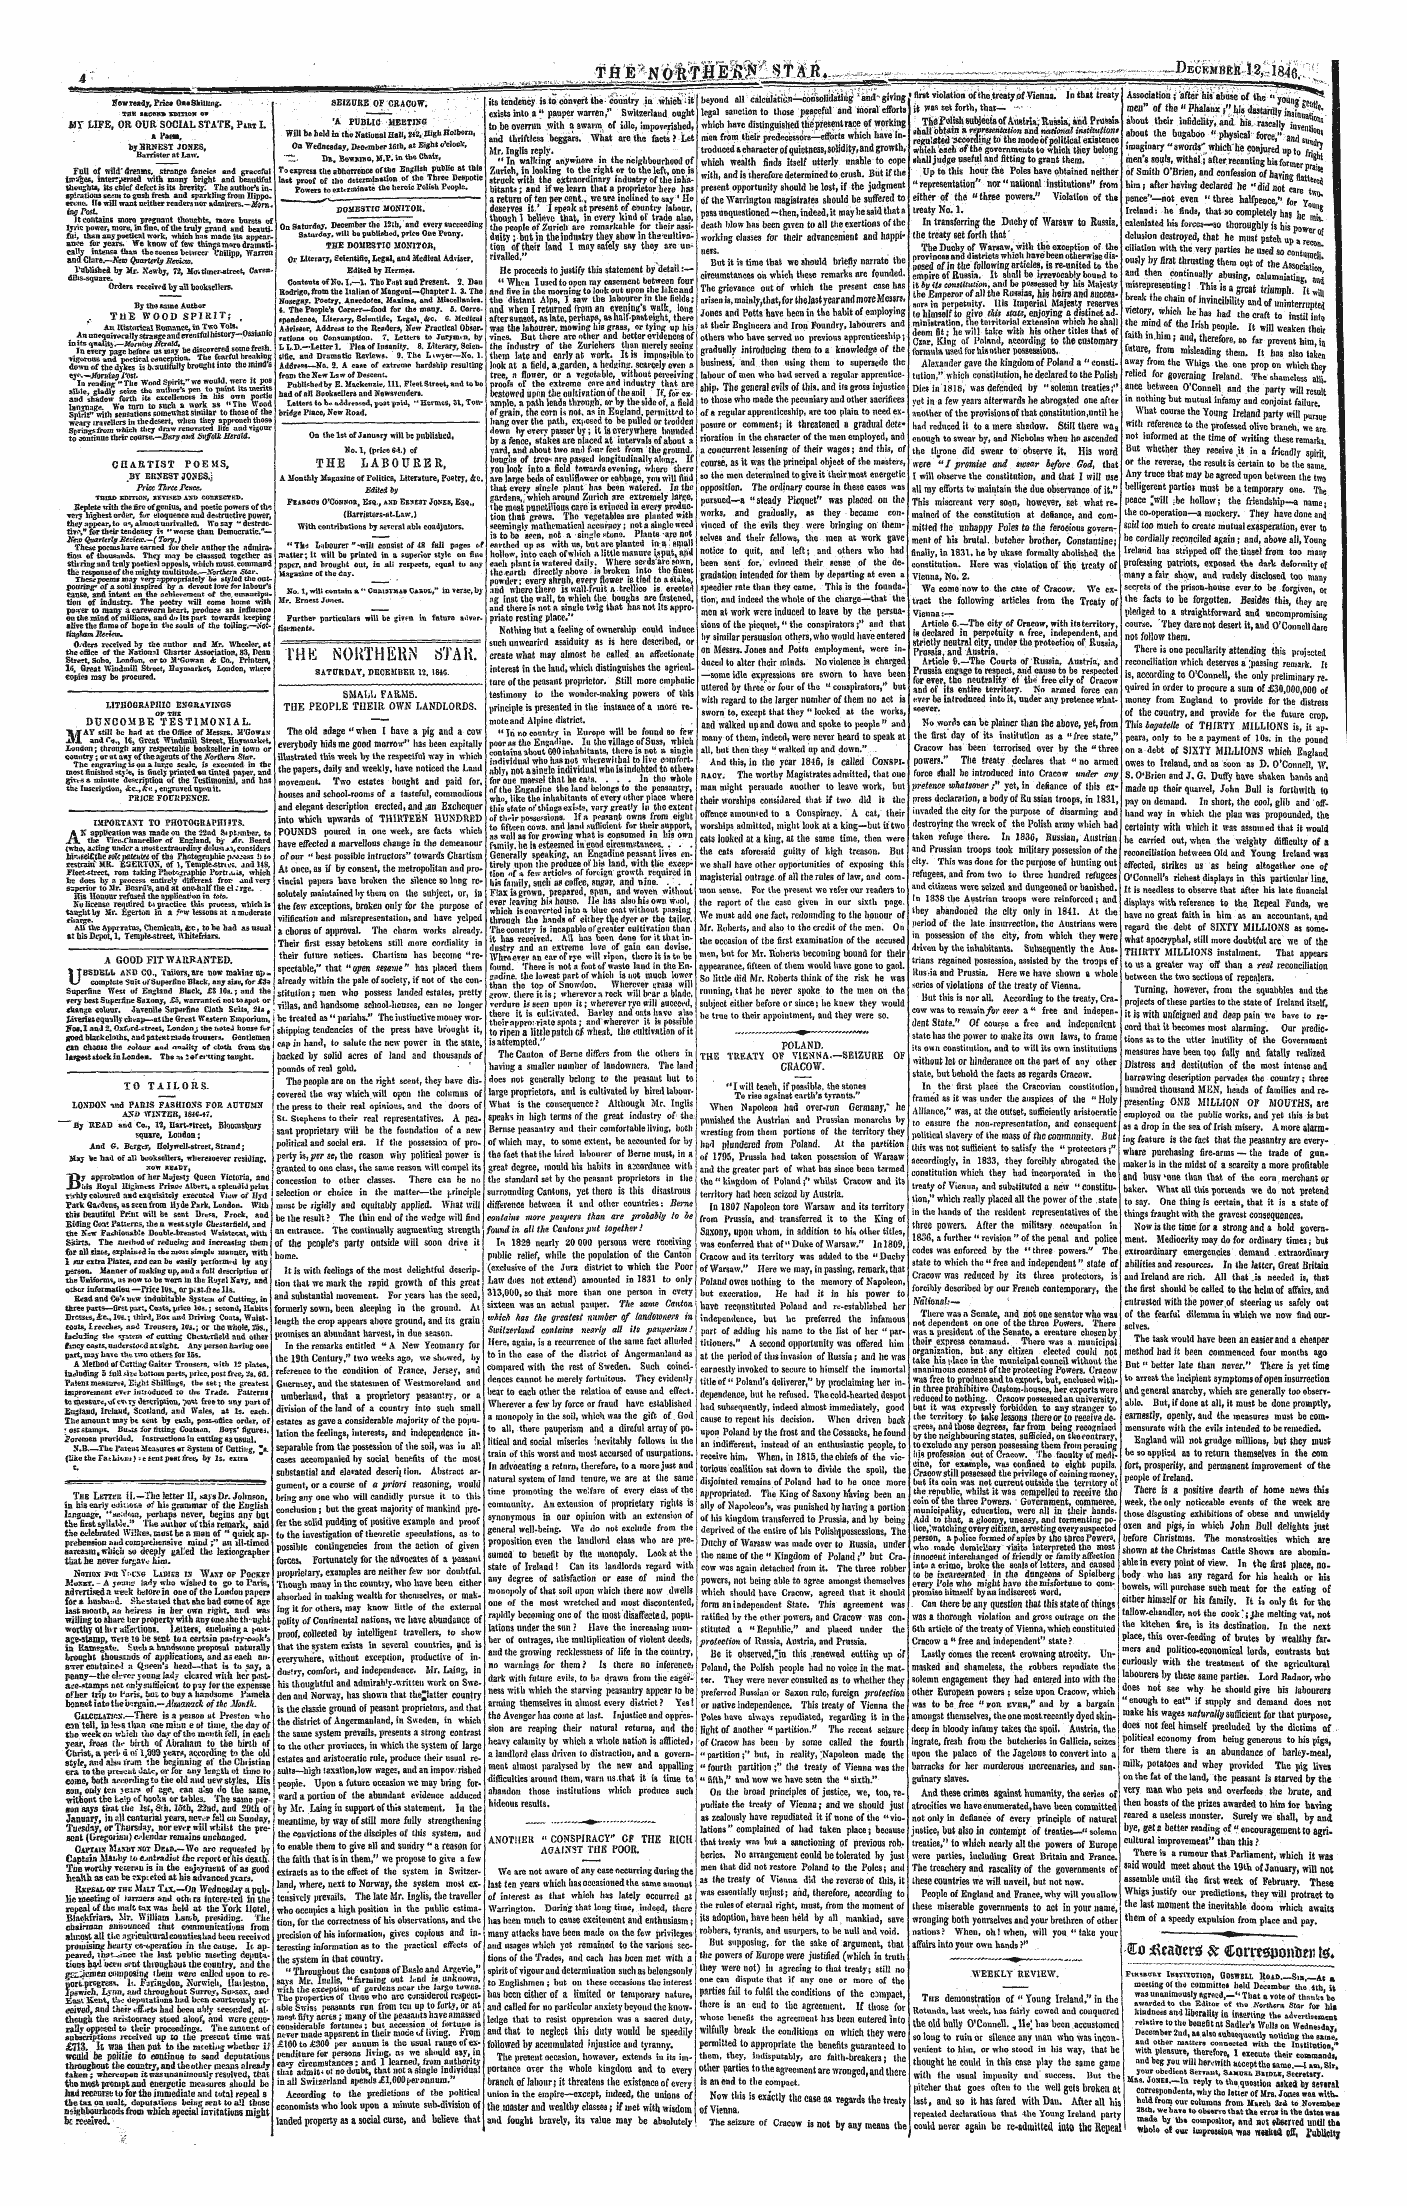 Northern Star (1837-1852): jS F Y, 1st edition - Thk Northern Star. Saturday, December 12. 18«.